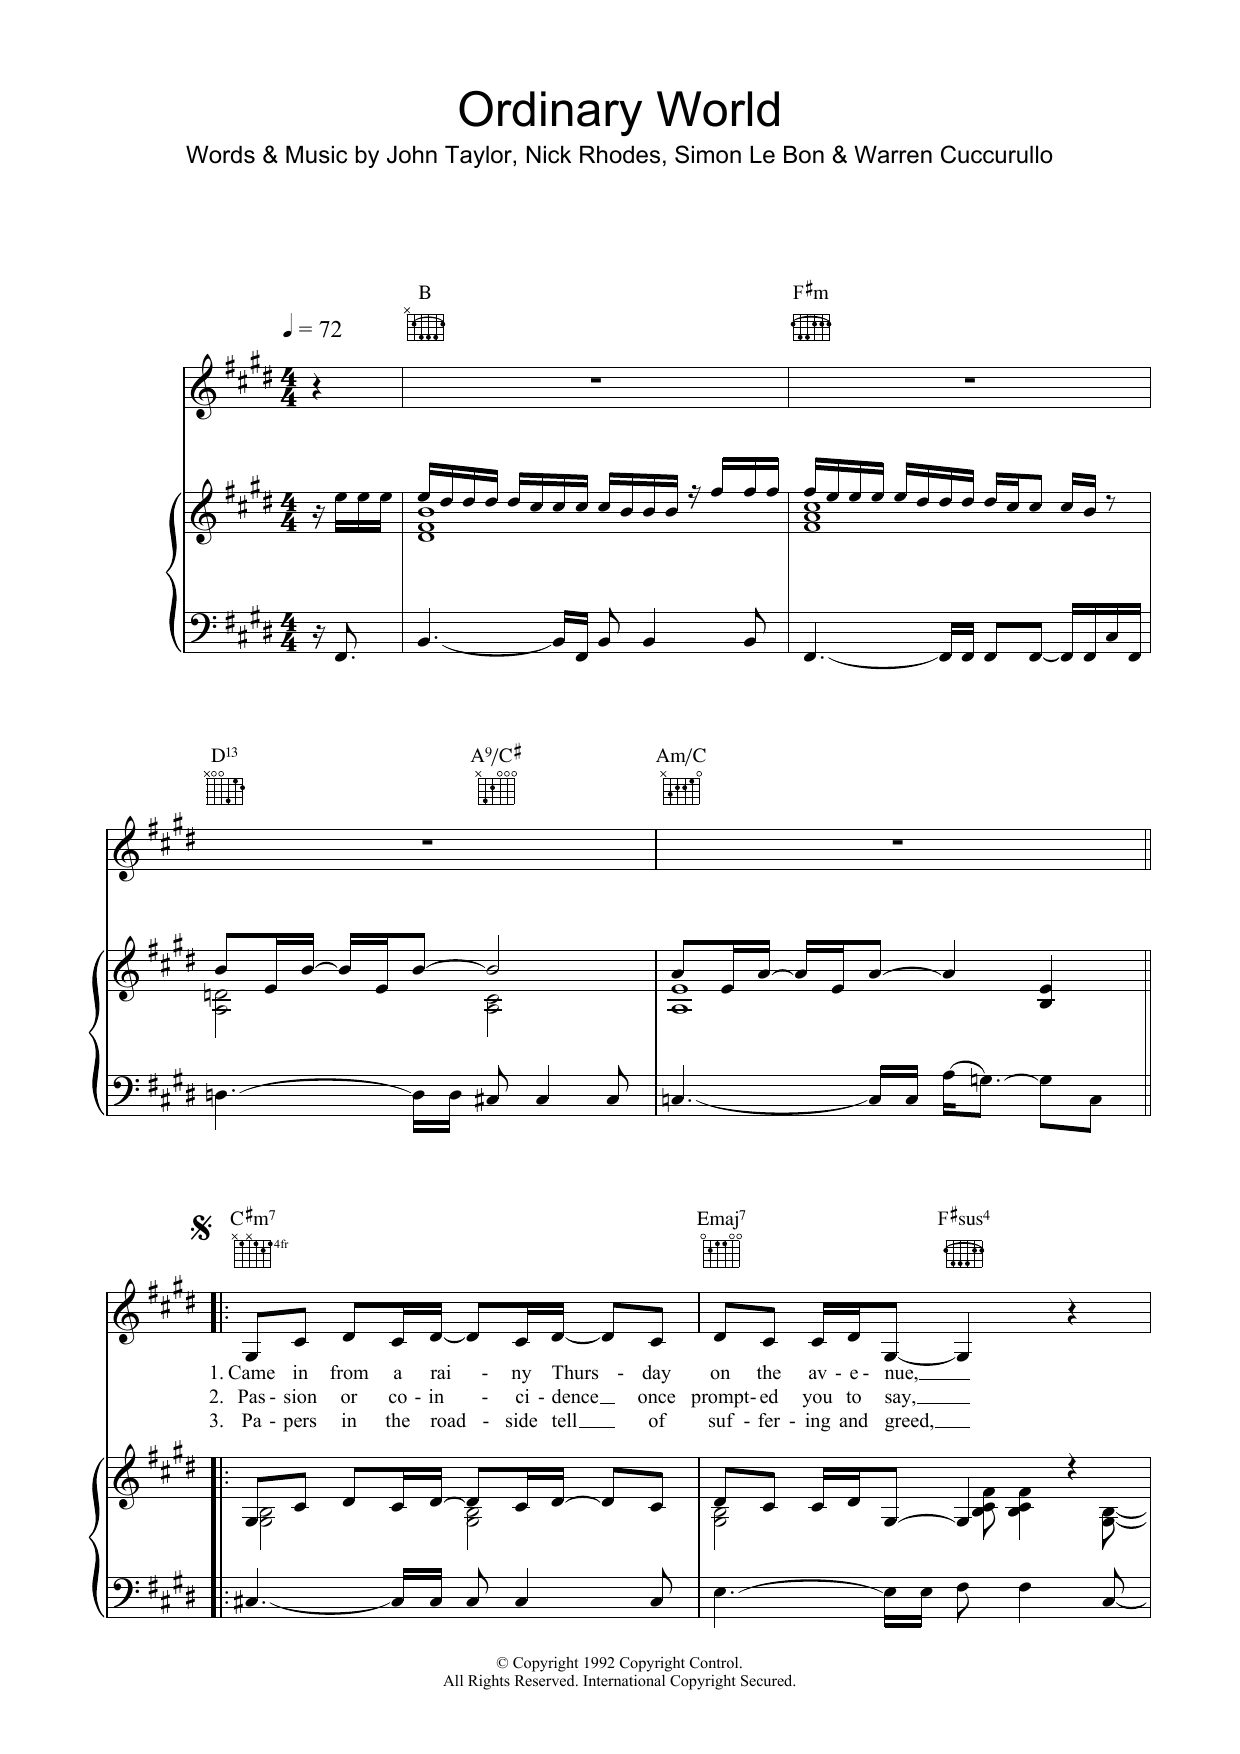 Duran Duran Ordinary World Sheet Music Notes & Chords for Piano, Vocal & Guitar (Right-Hand Melody) - Download or Print PDF